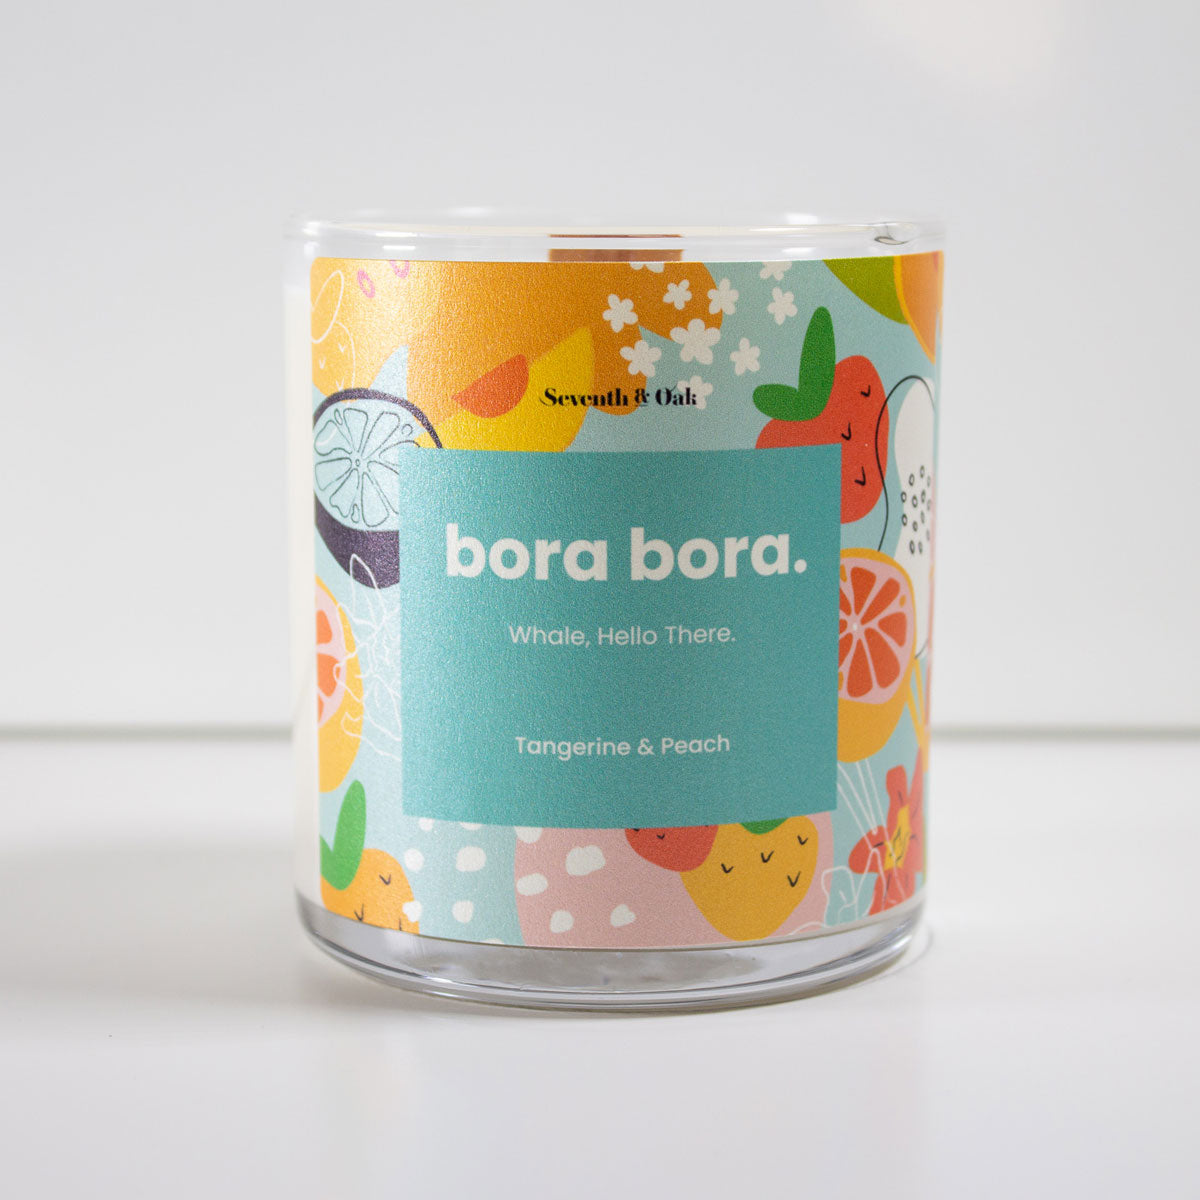 Seventh & Oak Candle - Bora Bora